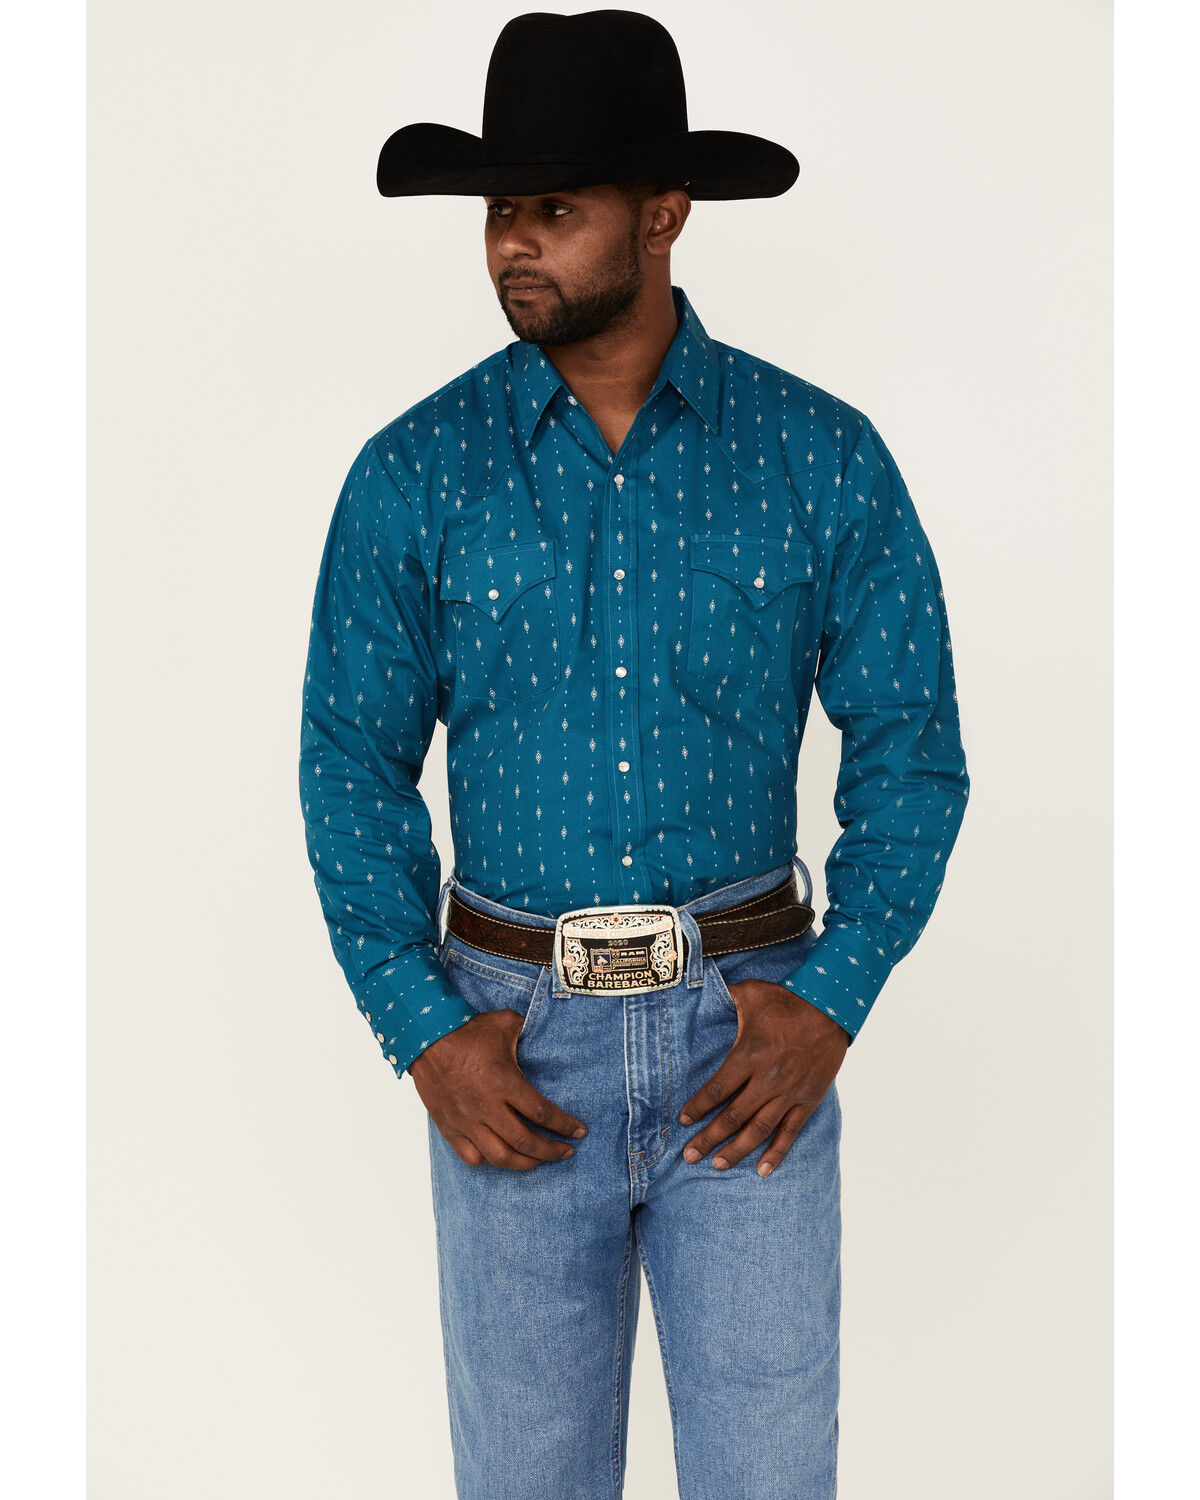 ELY CATTLEMAN Mens Long Sleeve Tone on Tone Western Shirt